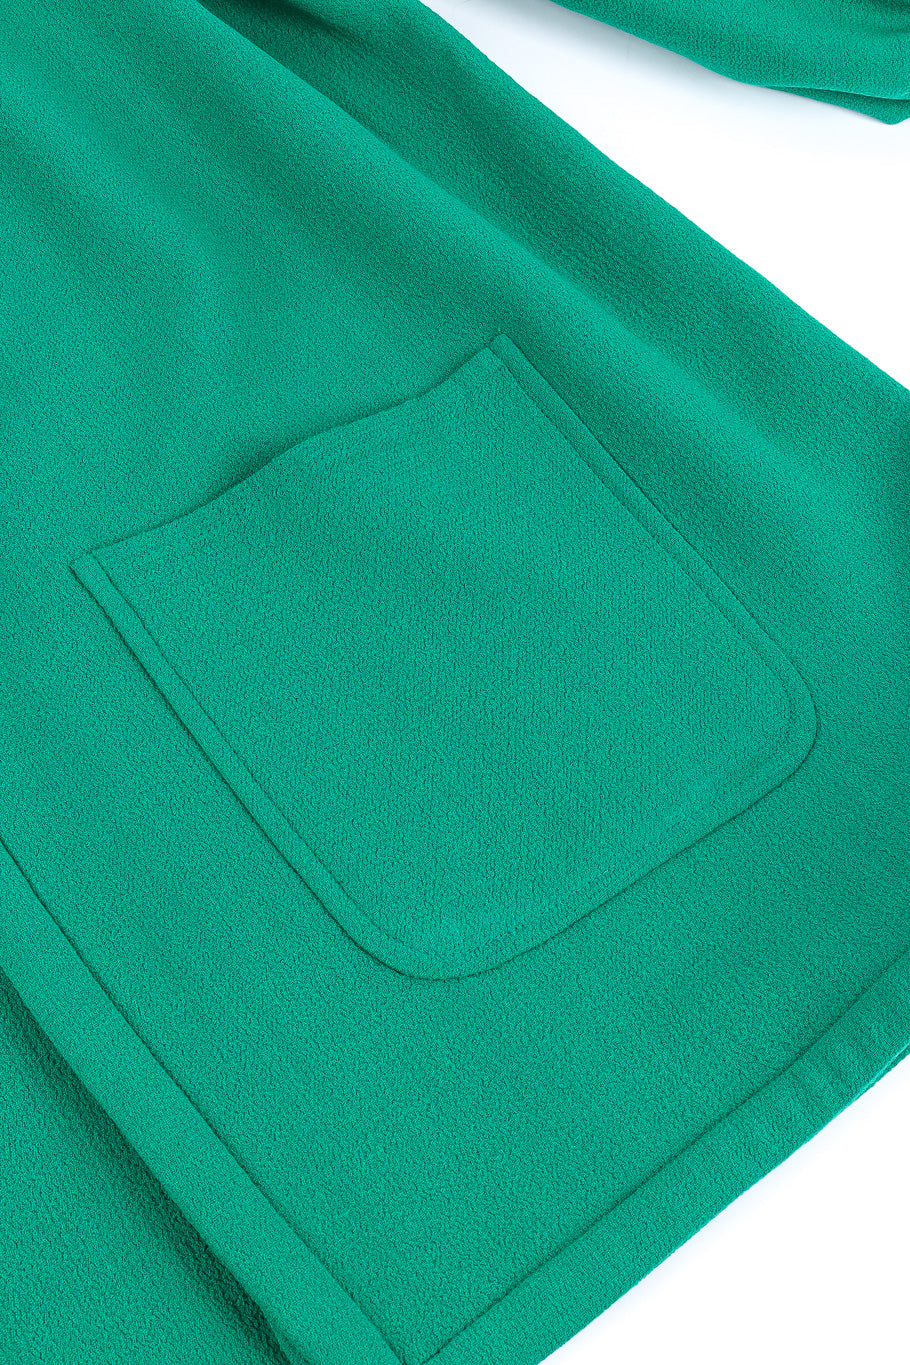 Valentino oversize wool jacket pocket detail @recessla